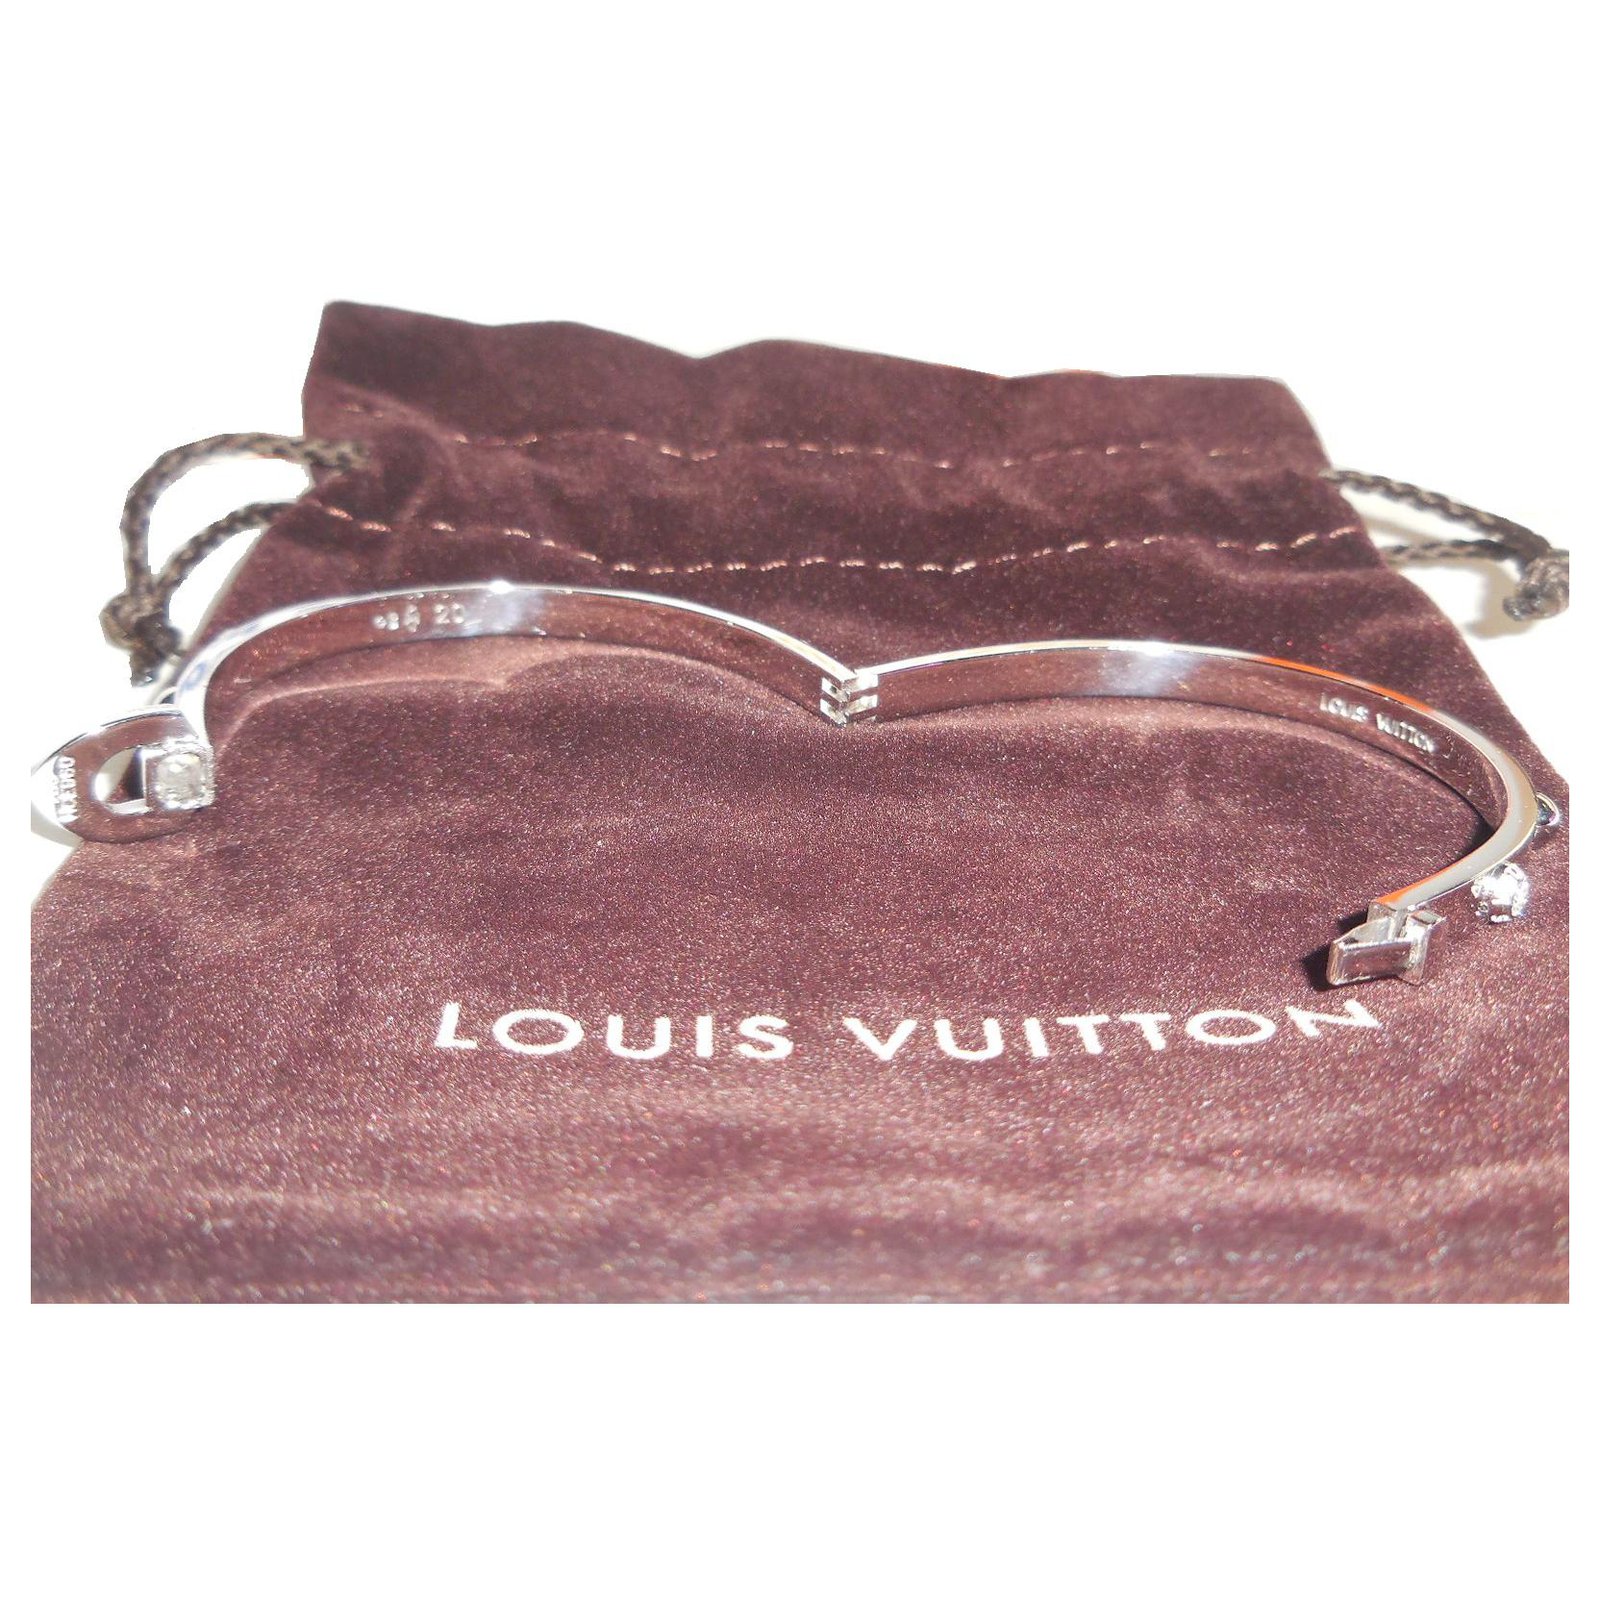 Louis Vuitton Clous Stud Earrings 18K White Gold with Diamonds